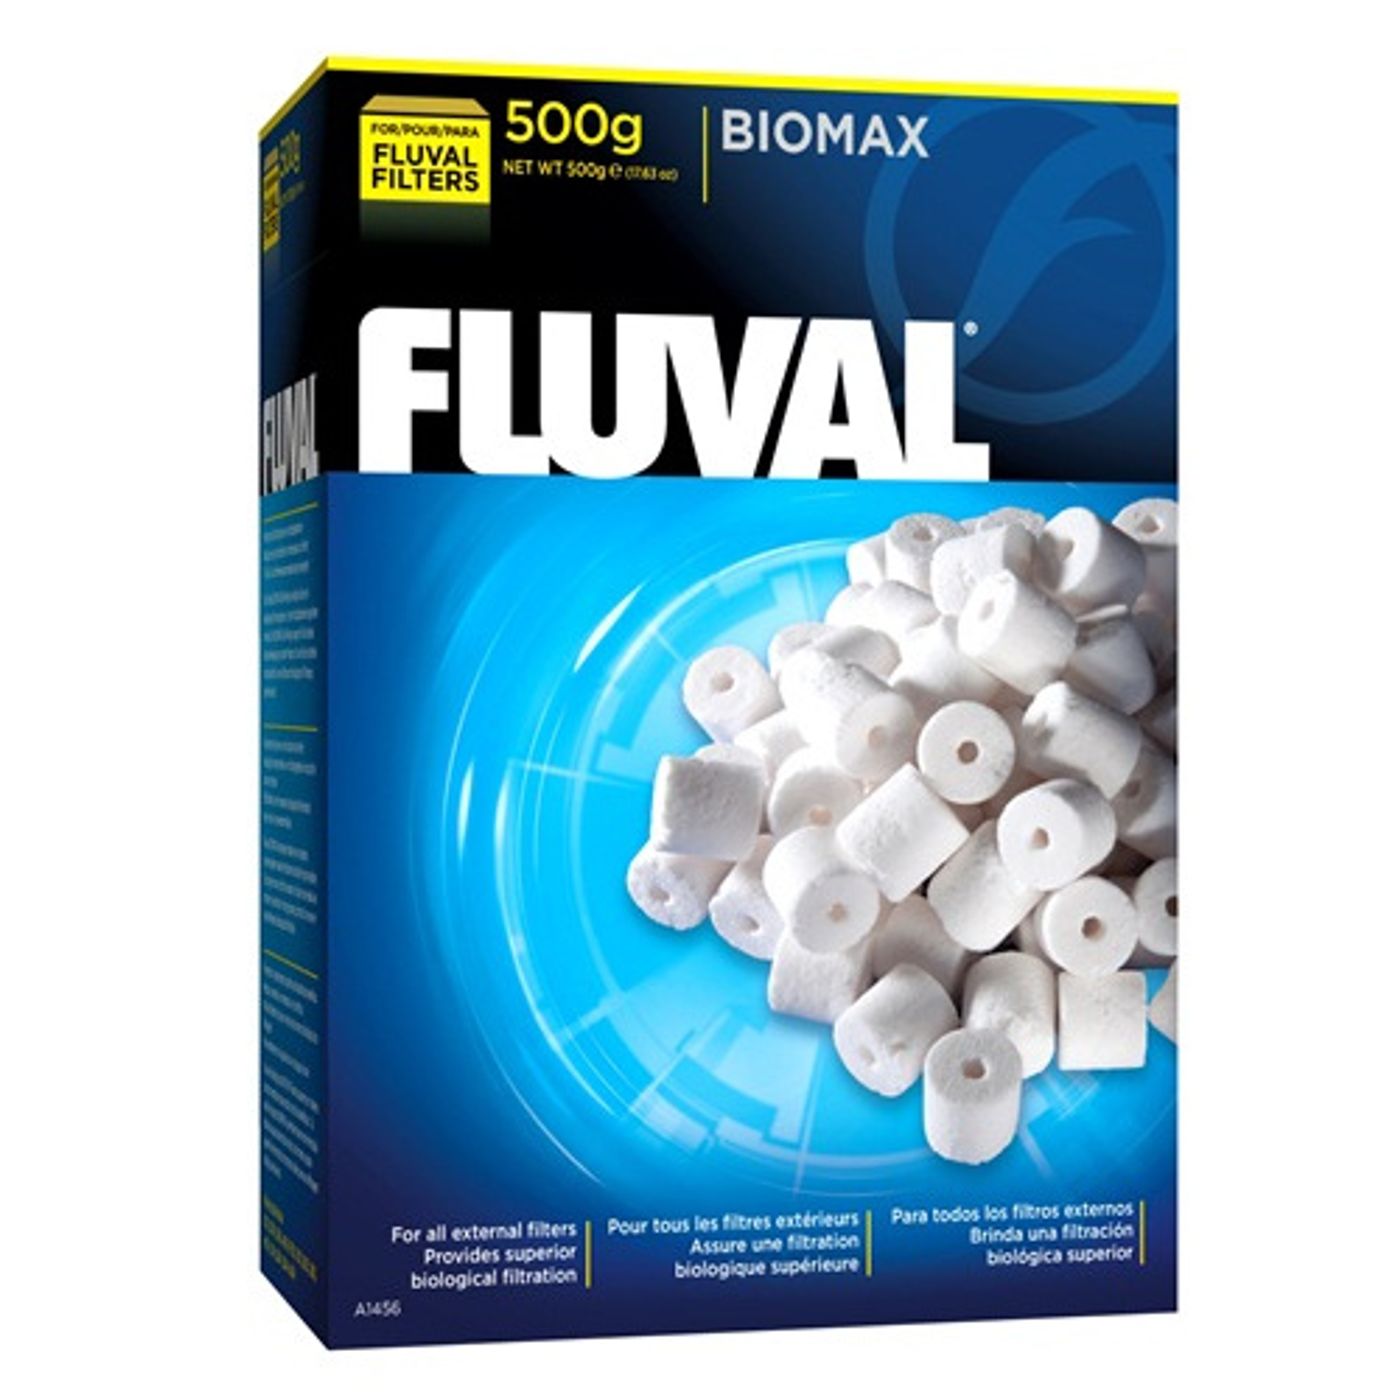 FLUVAL-Biomax-500